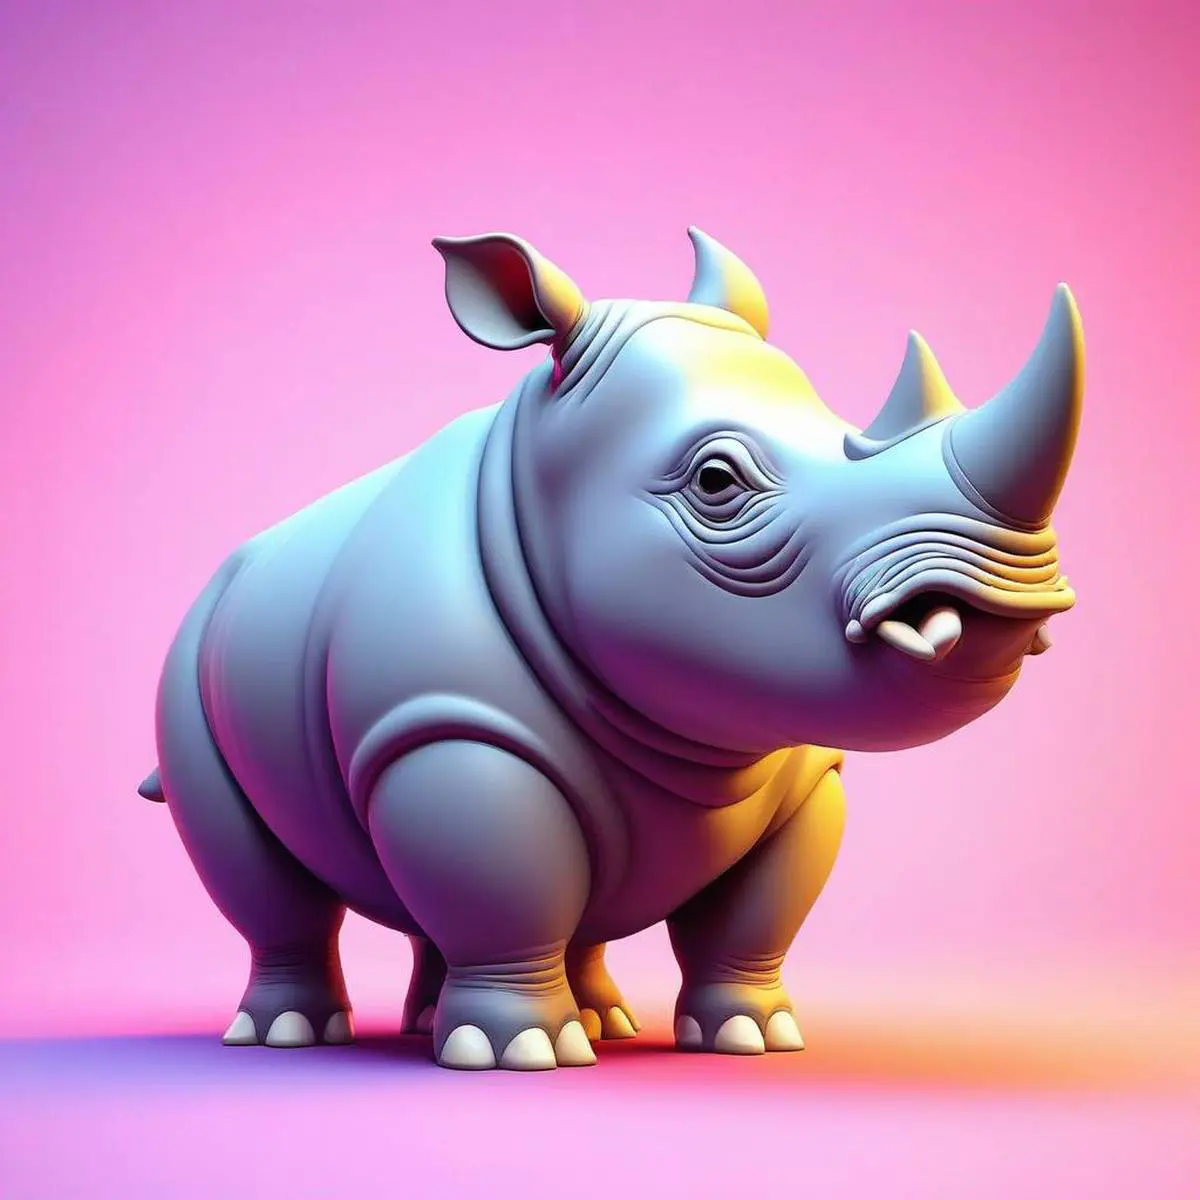 Rhinoceros puns